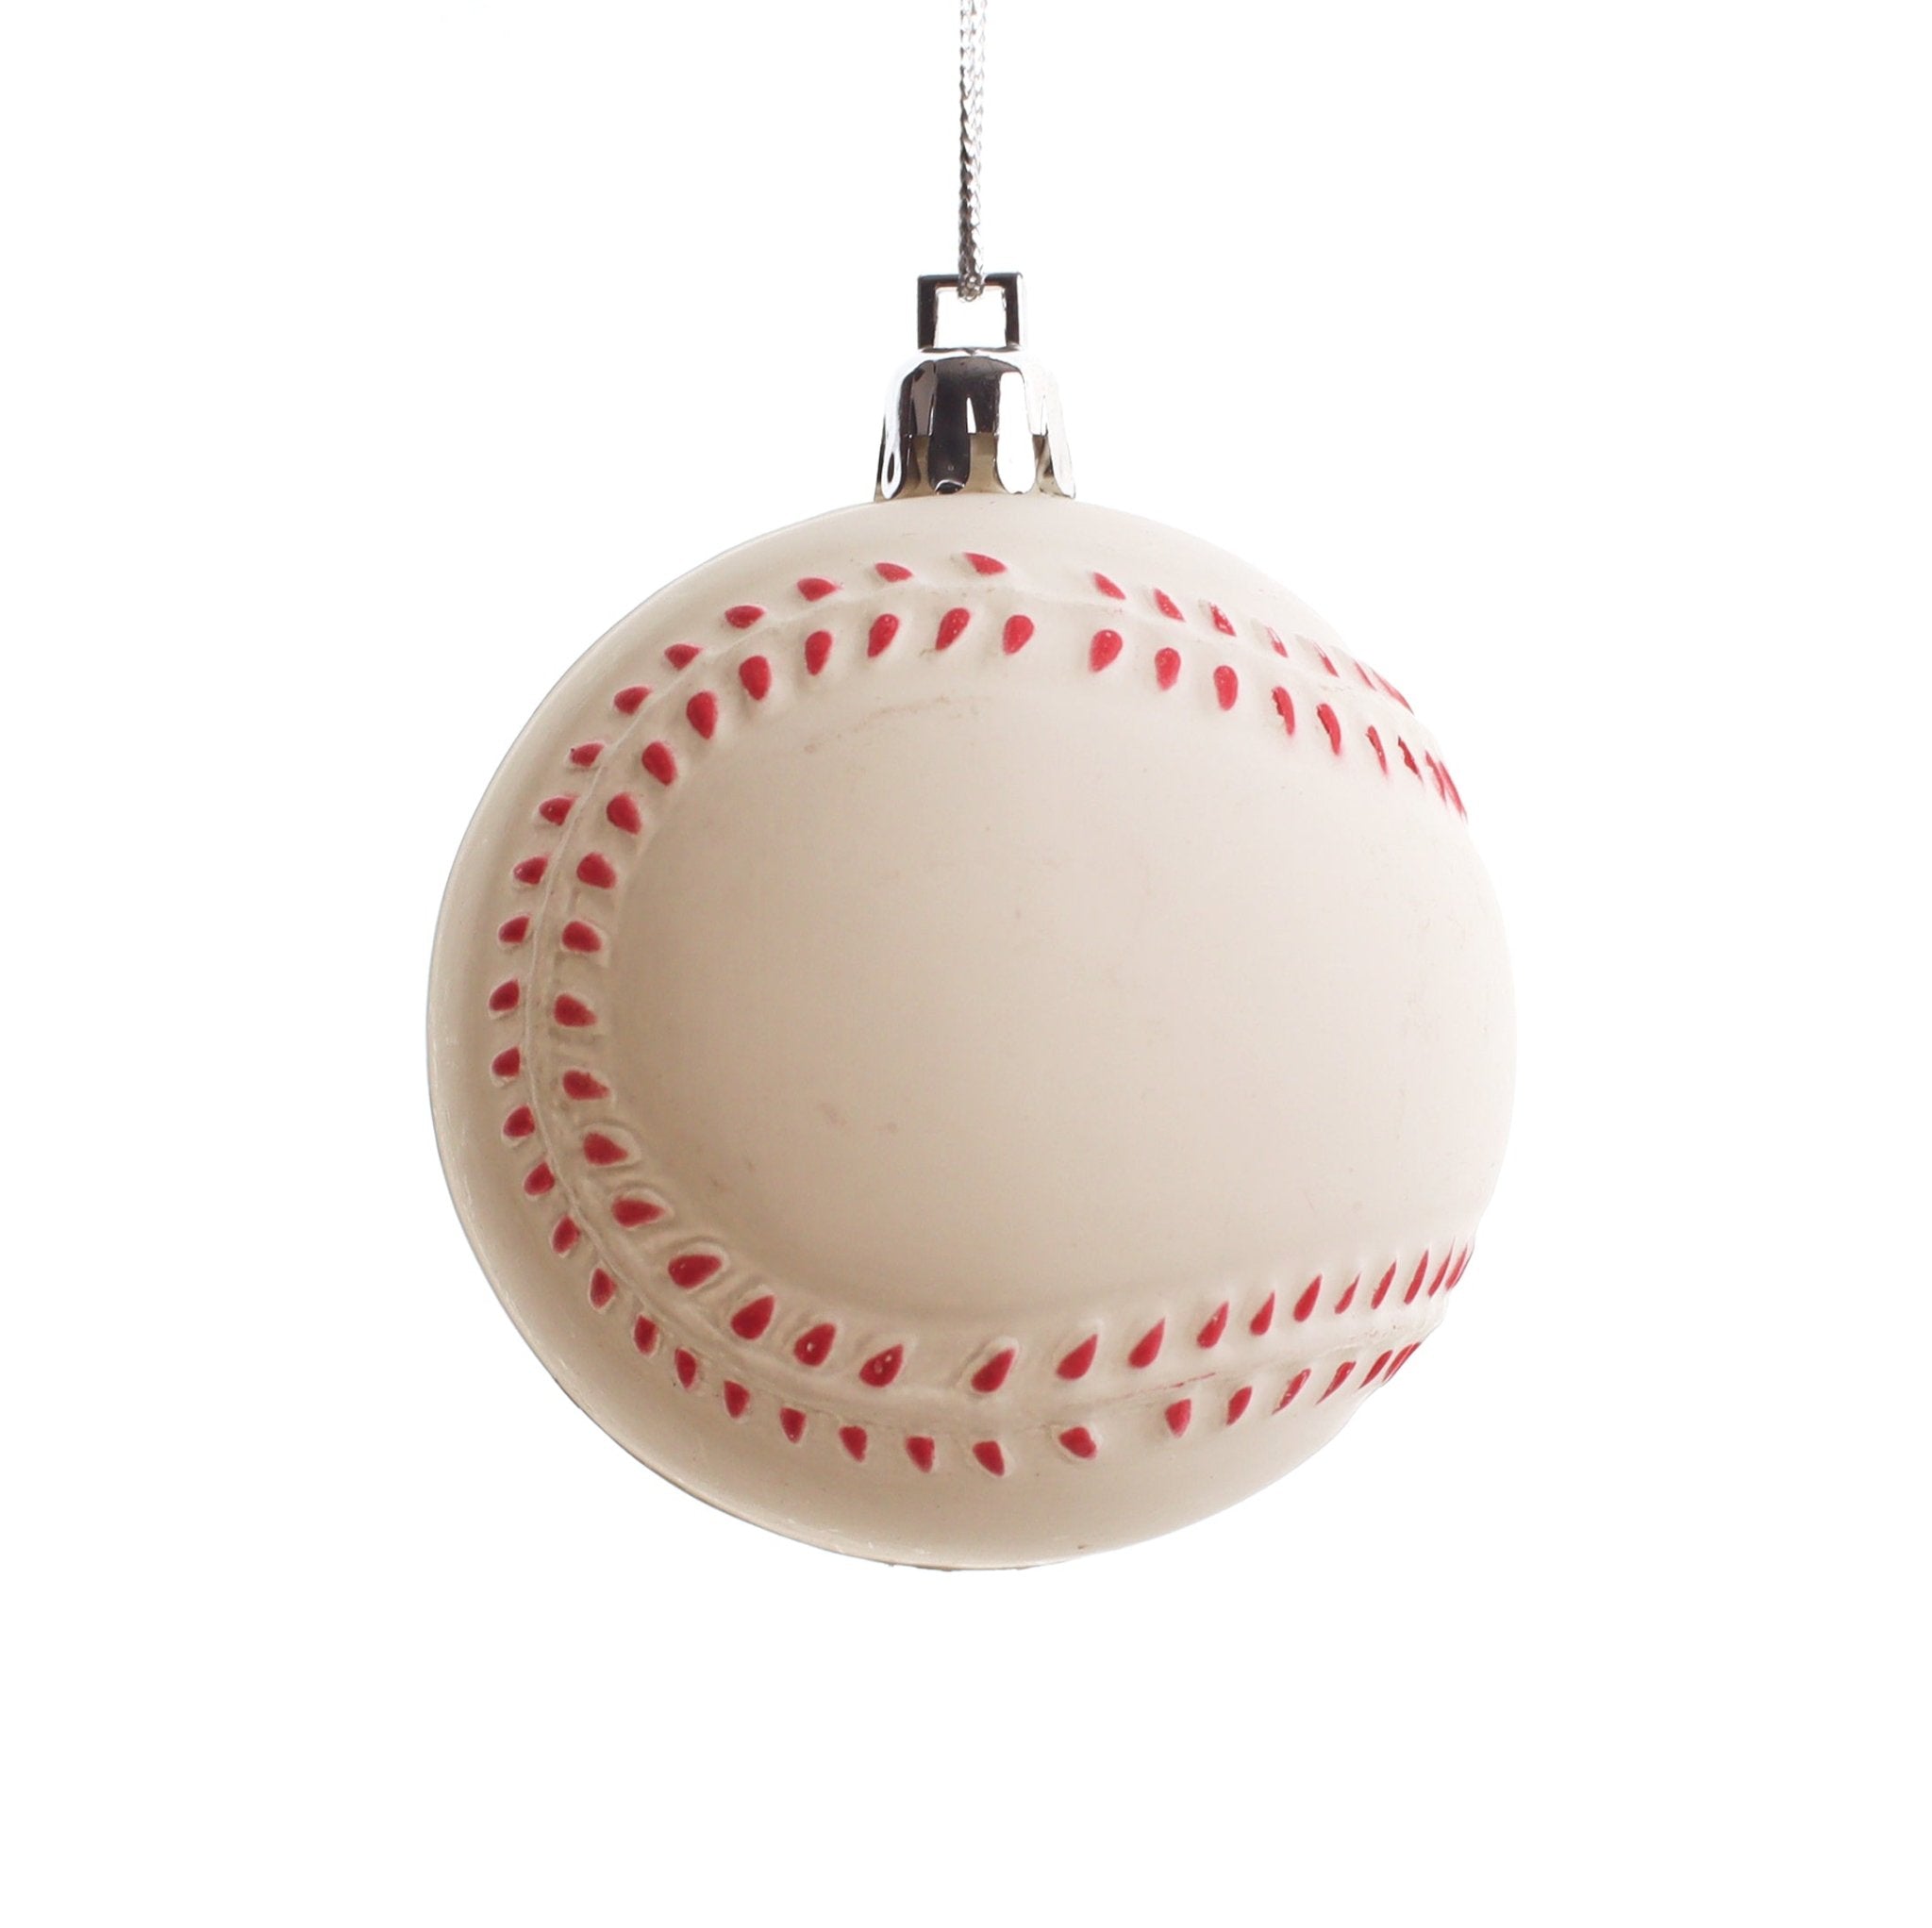 8cm Baseball Shatterproof Ornament - MODA FLORA Santa's Workshop